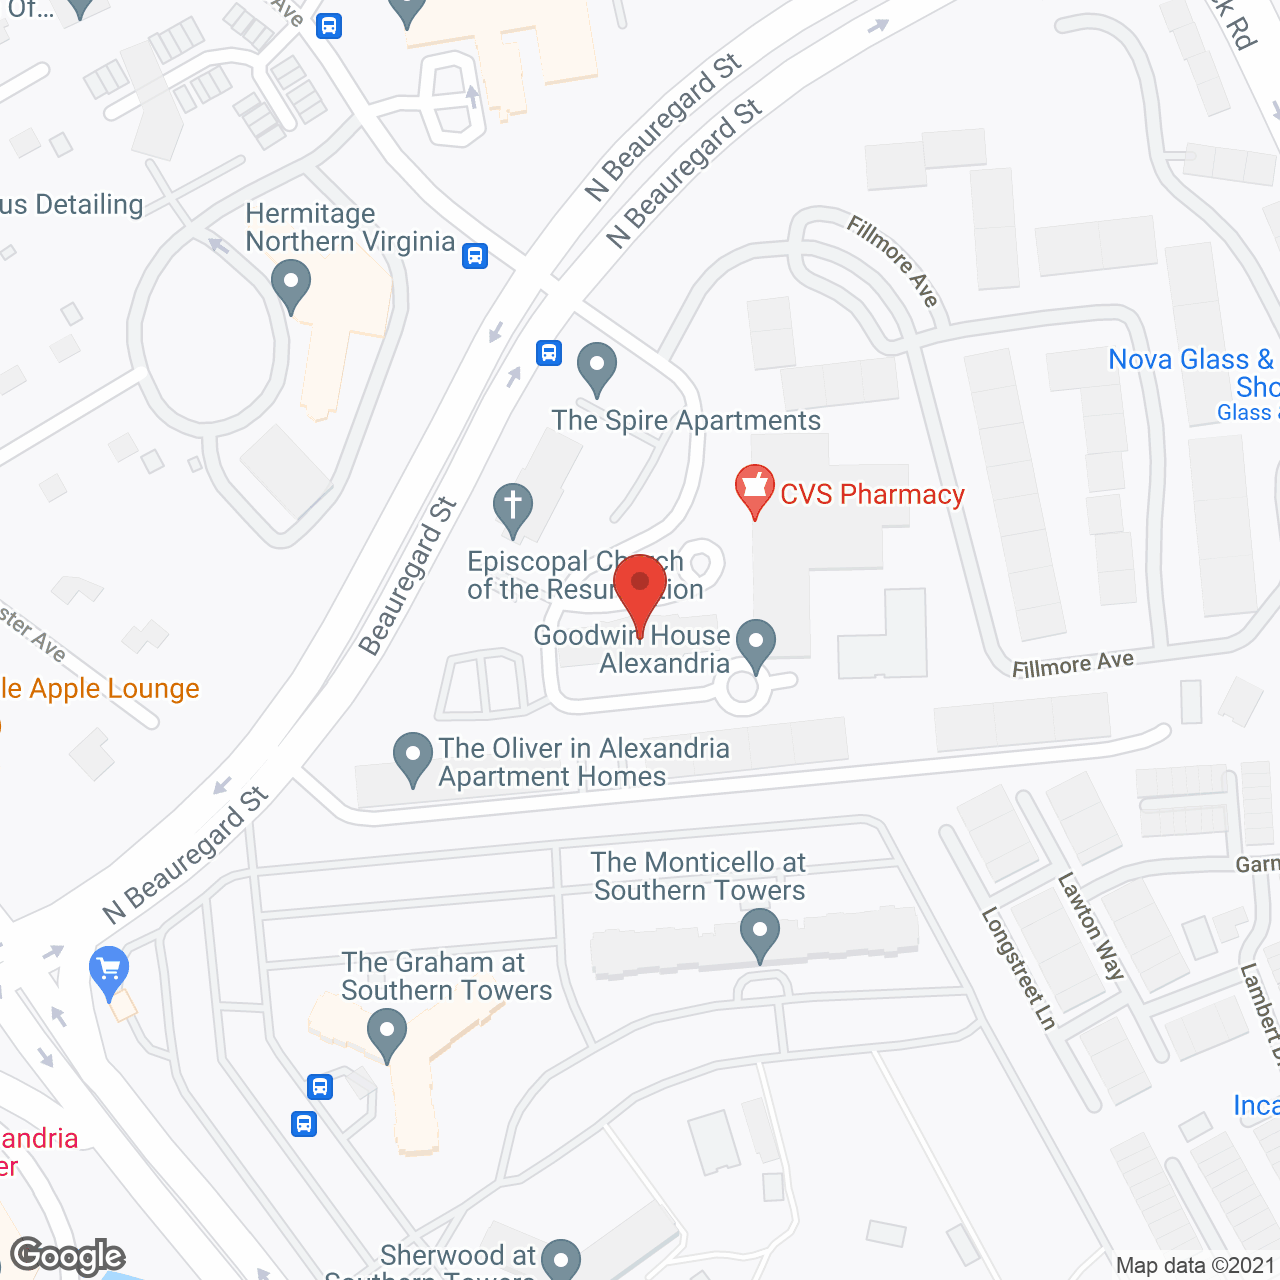 Goodwin House Alexandria in google map